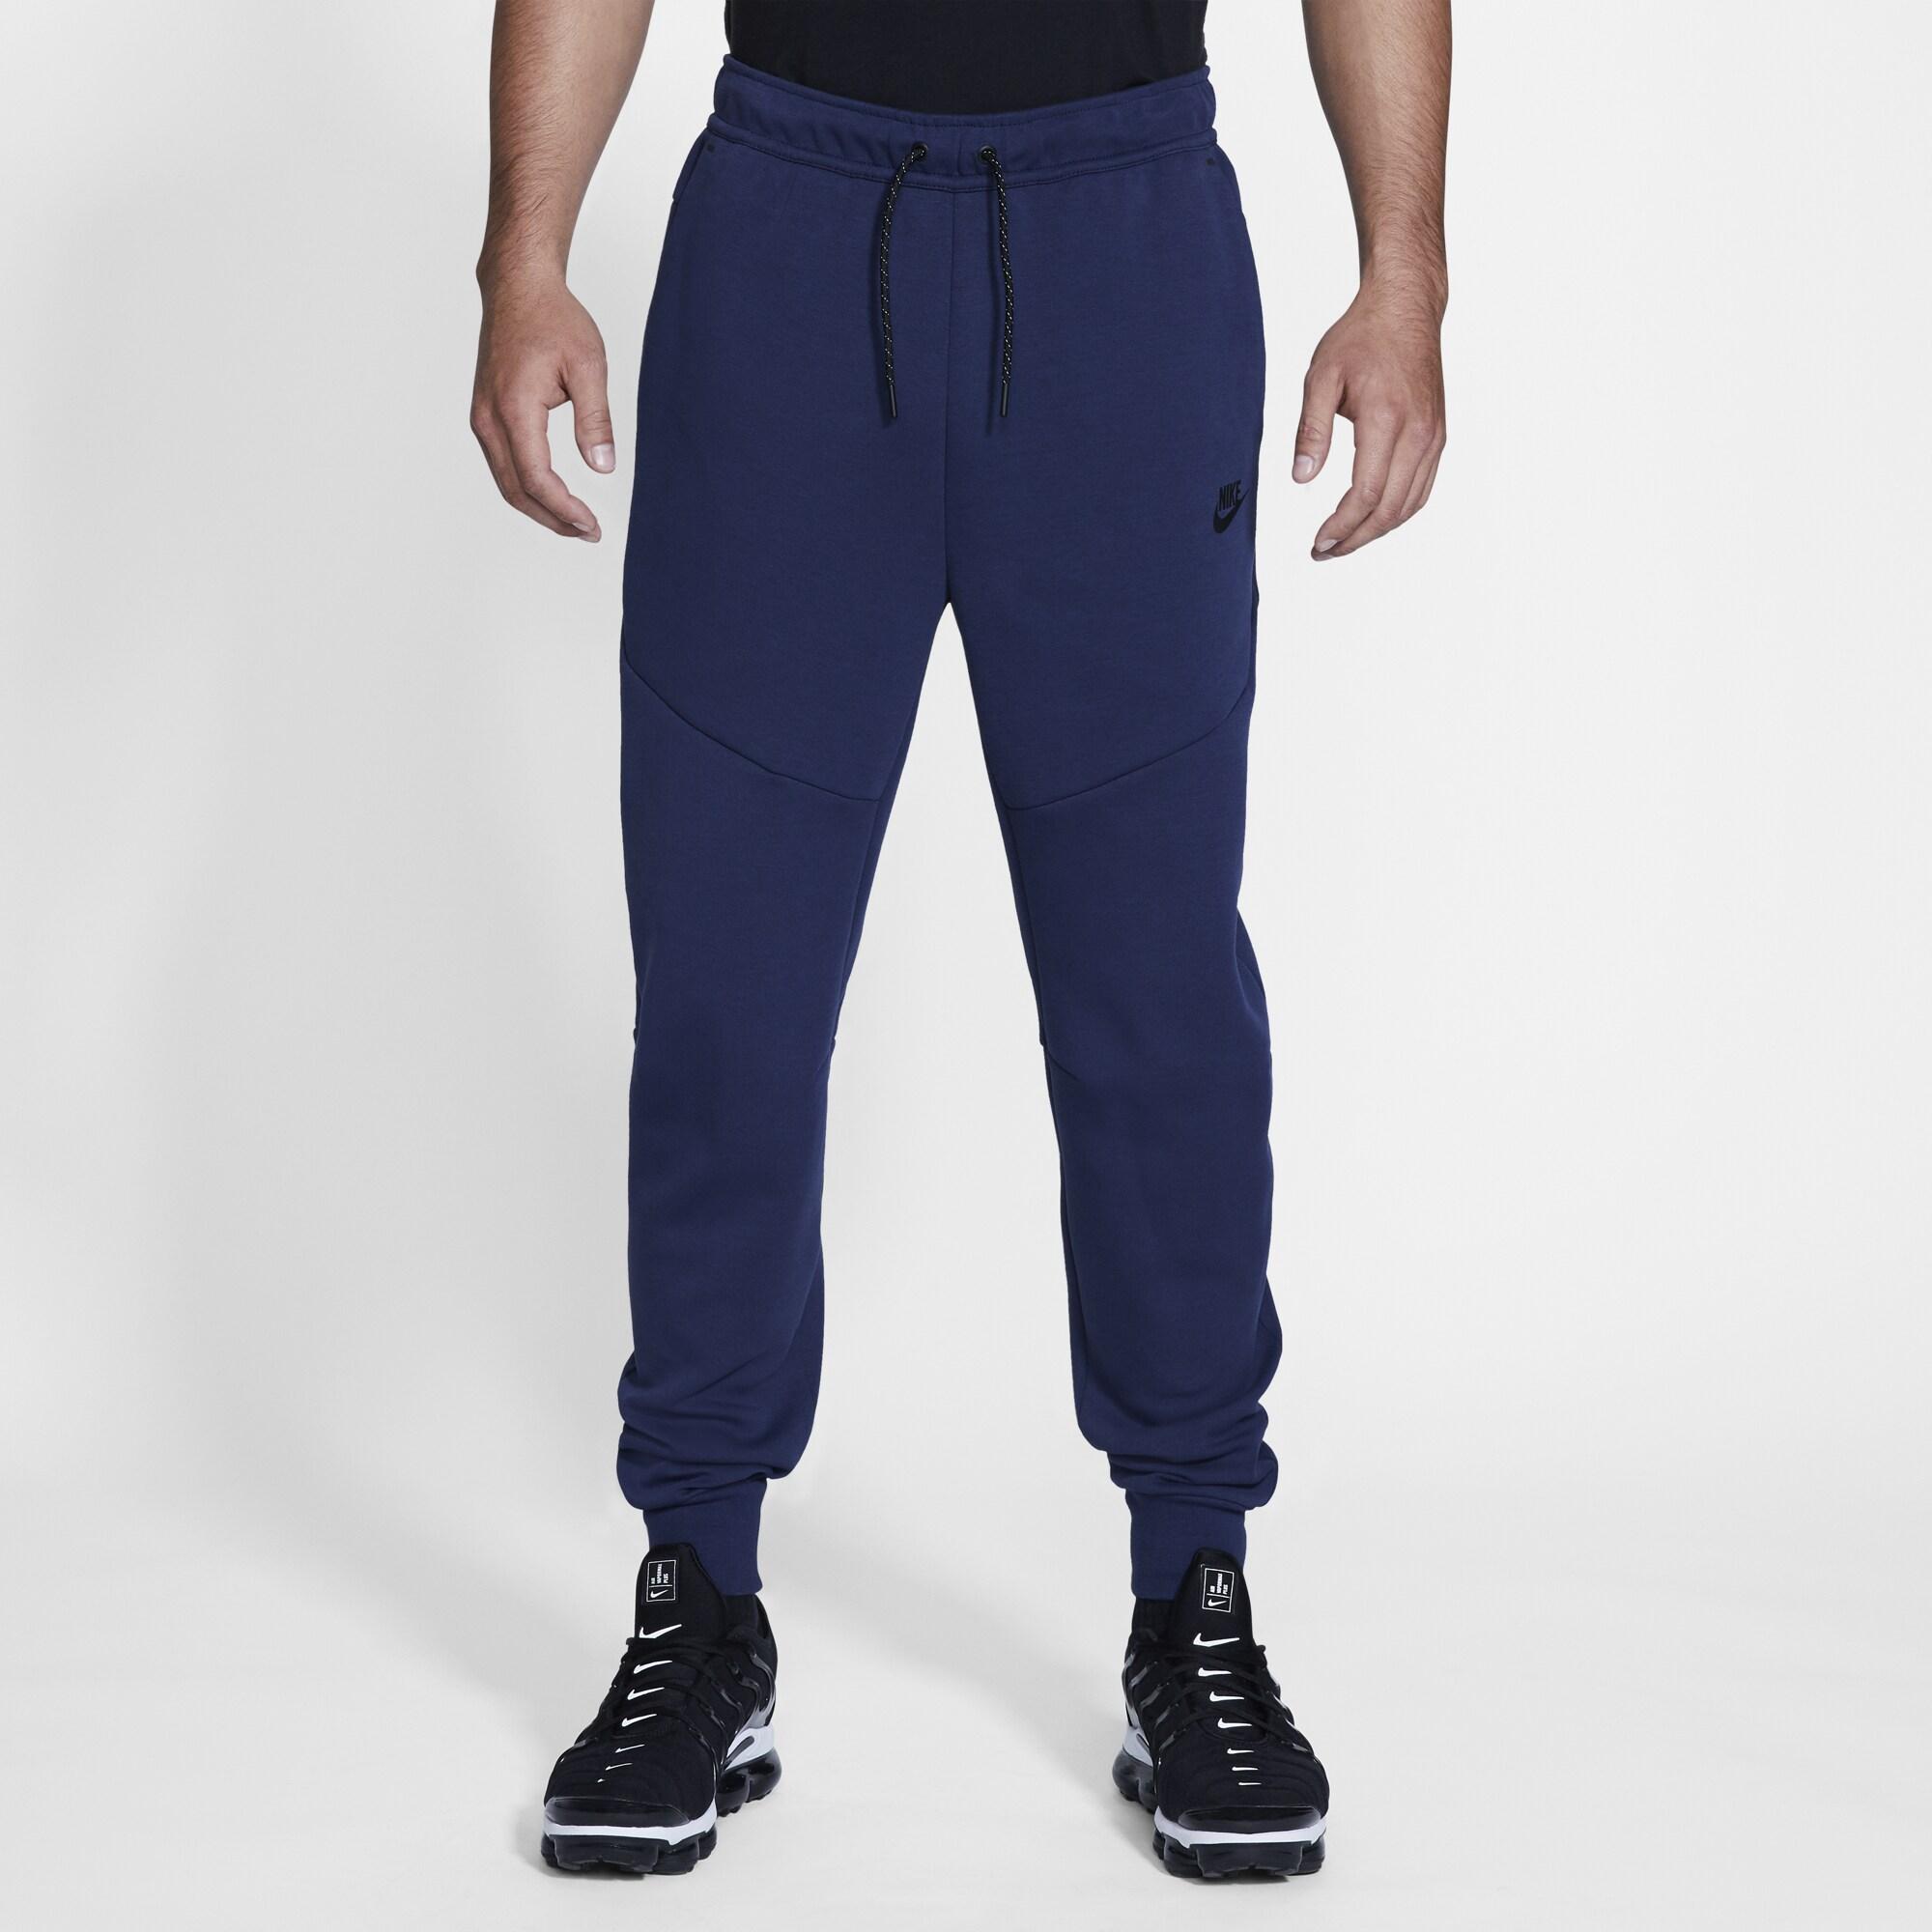 Nike Tech Fleece Jogger in Midnight Navy/Black (Blue) for Men - Lyst